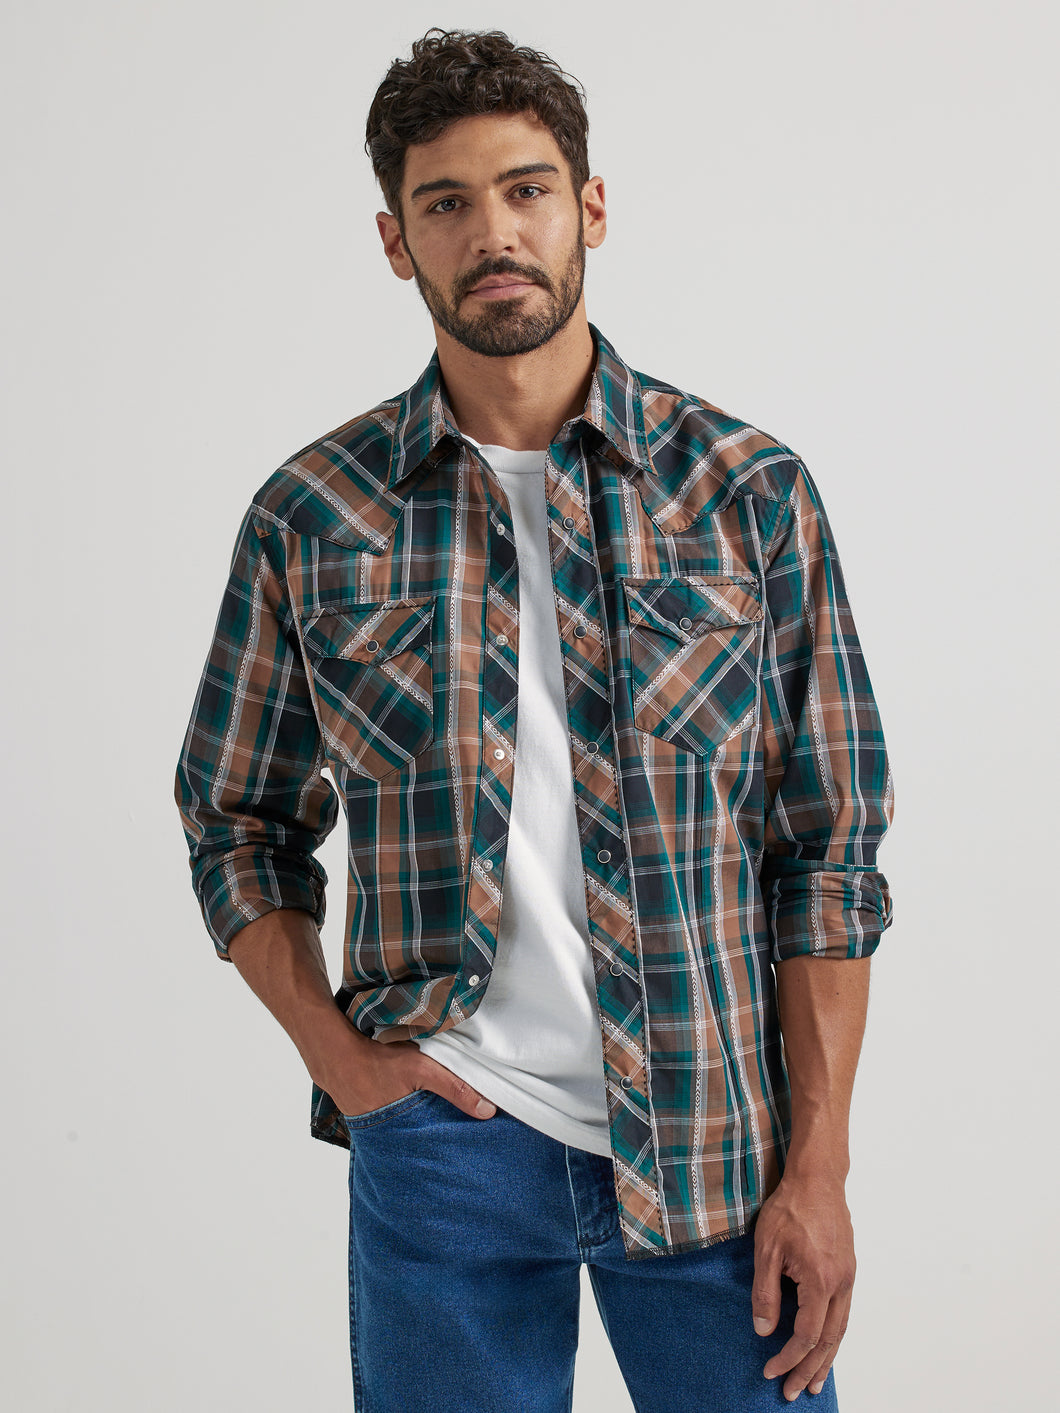 Pard's Western Shop Wrangler Green/Brown Plaid Fashion Snap Western Shirt for Men